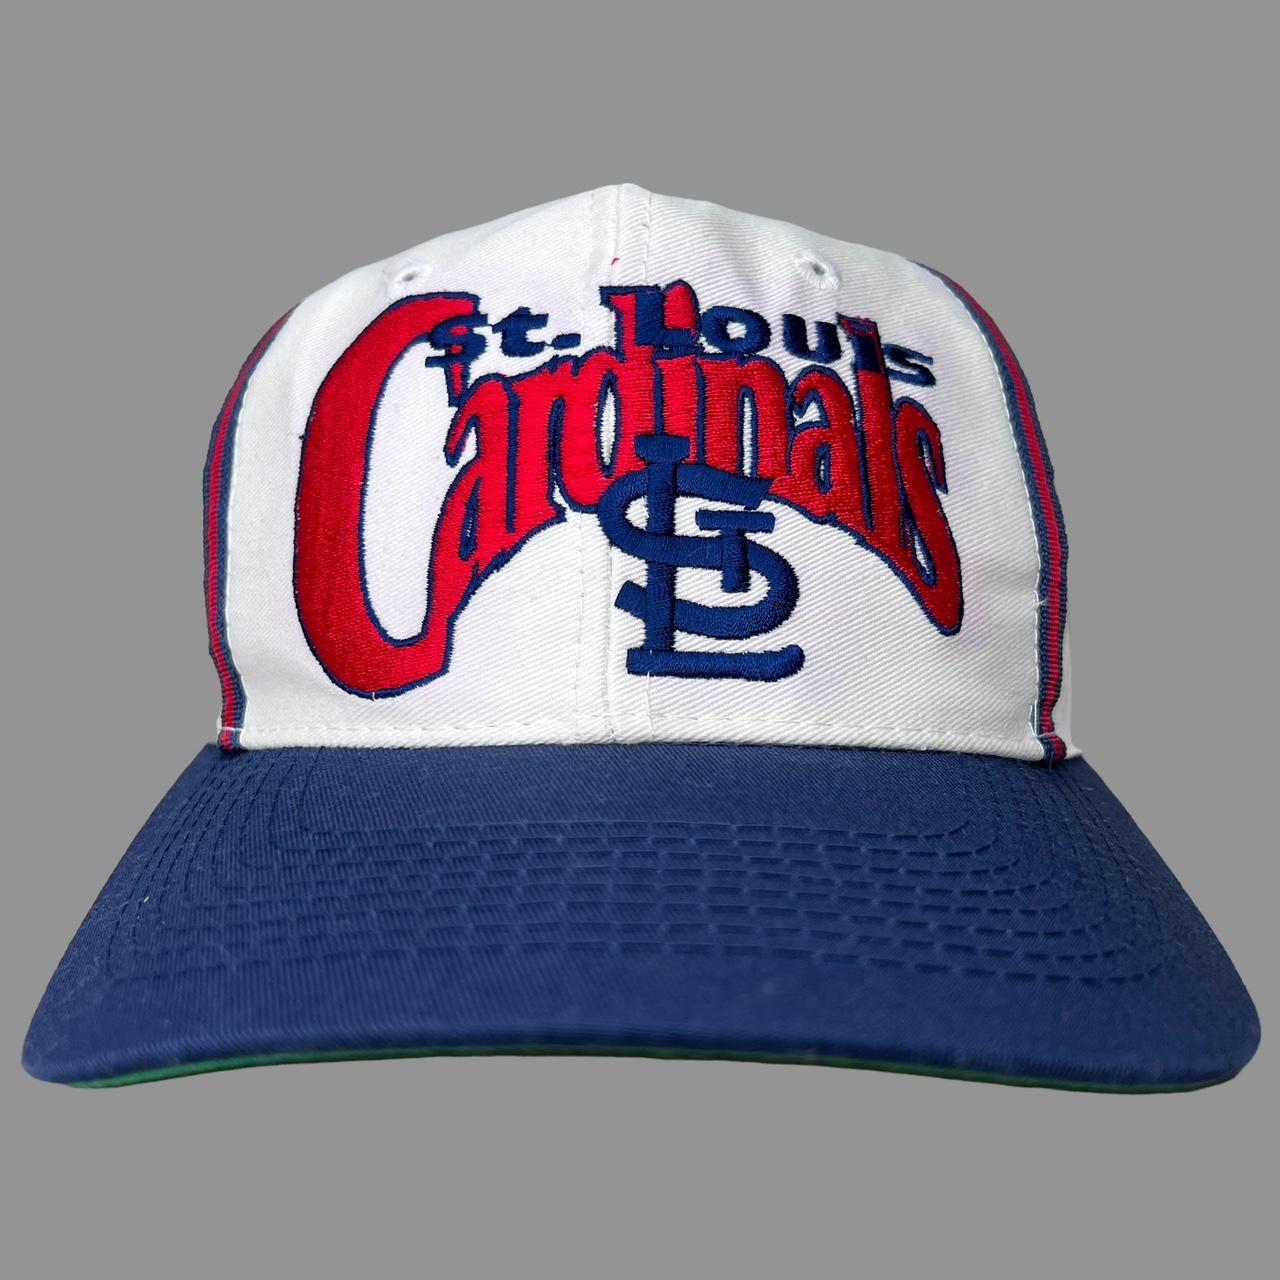 St. Louis Cardinals Hat Vintage Cardinals Hat Vintage MLB 